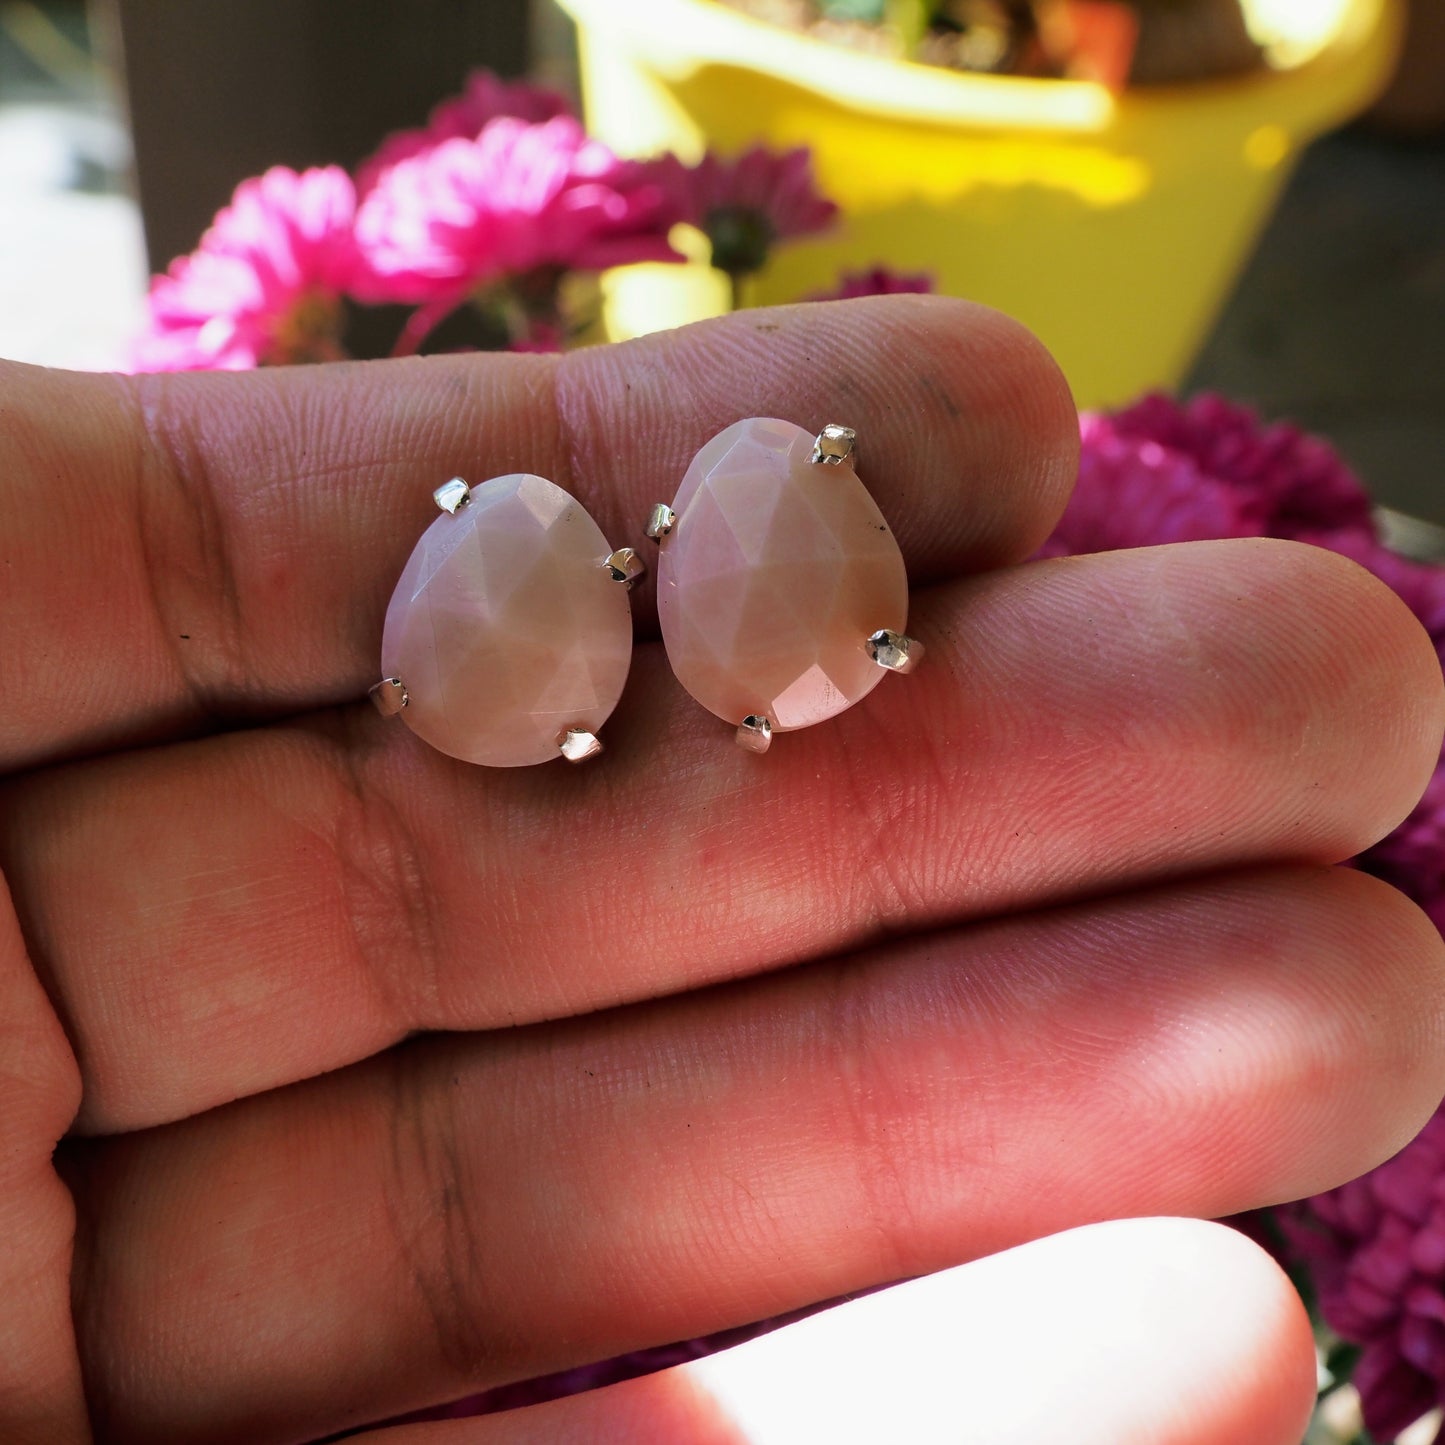 Pink Opal Studs